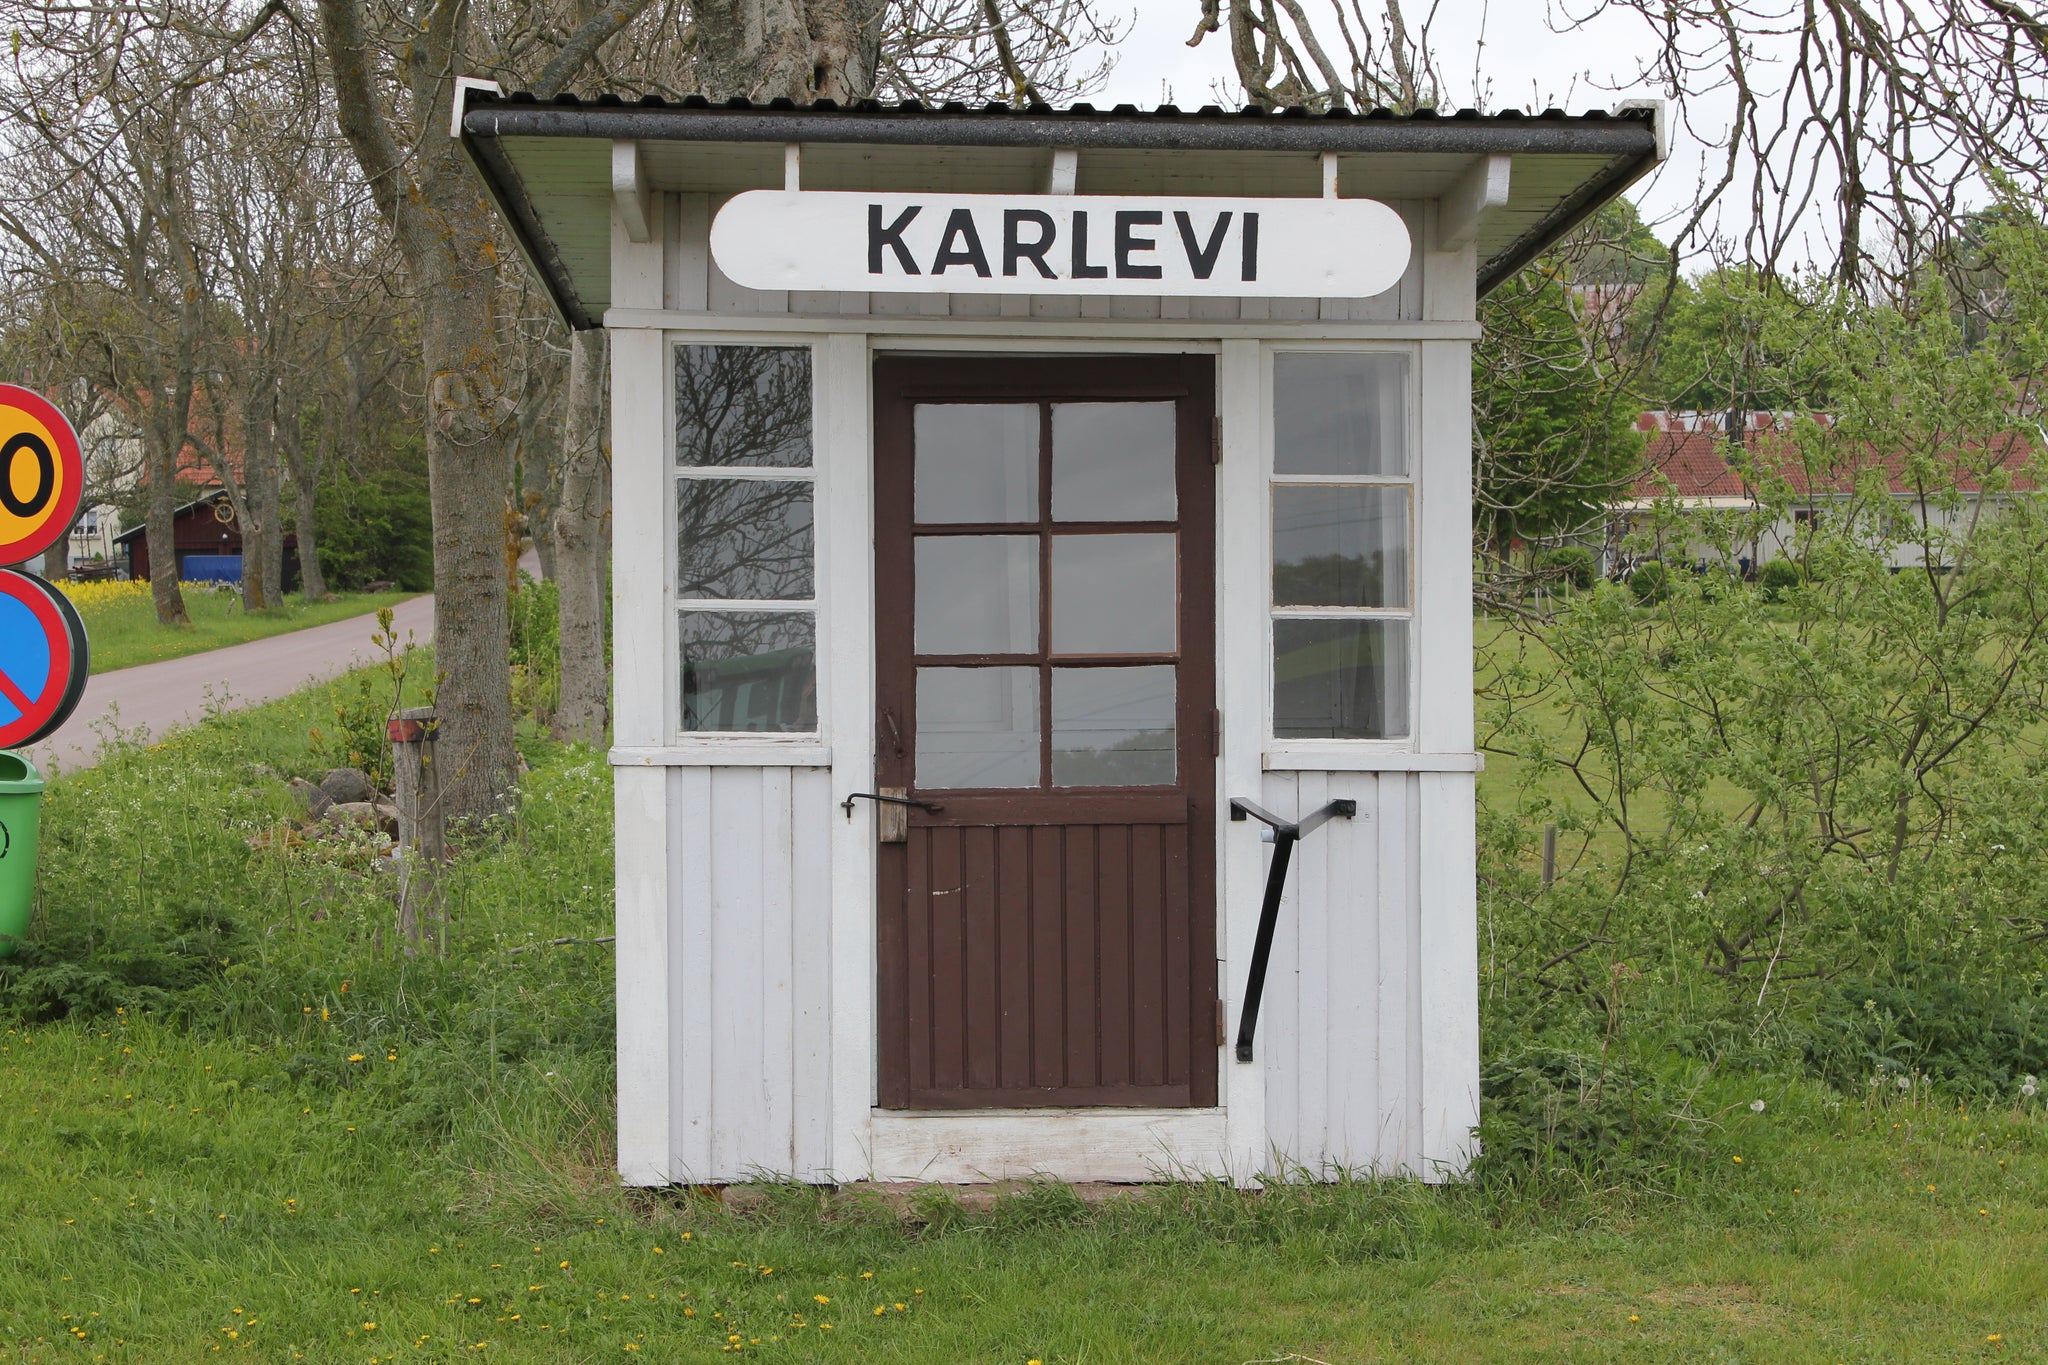 Karlevi Väntkur